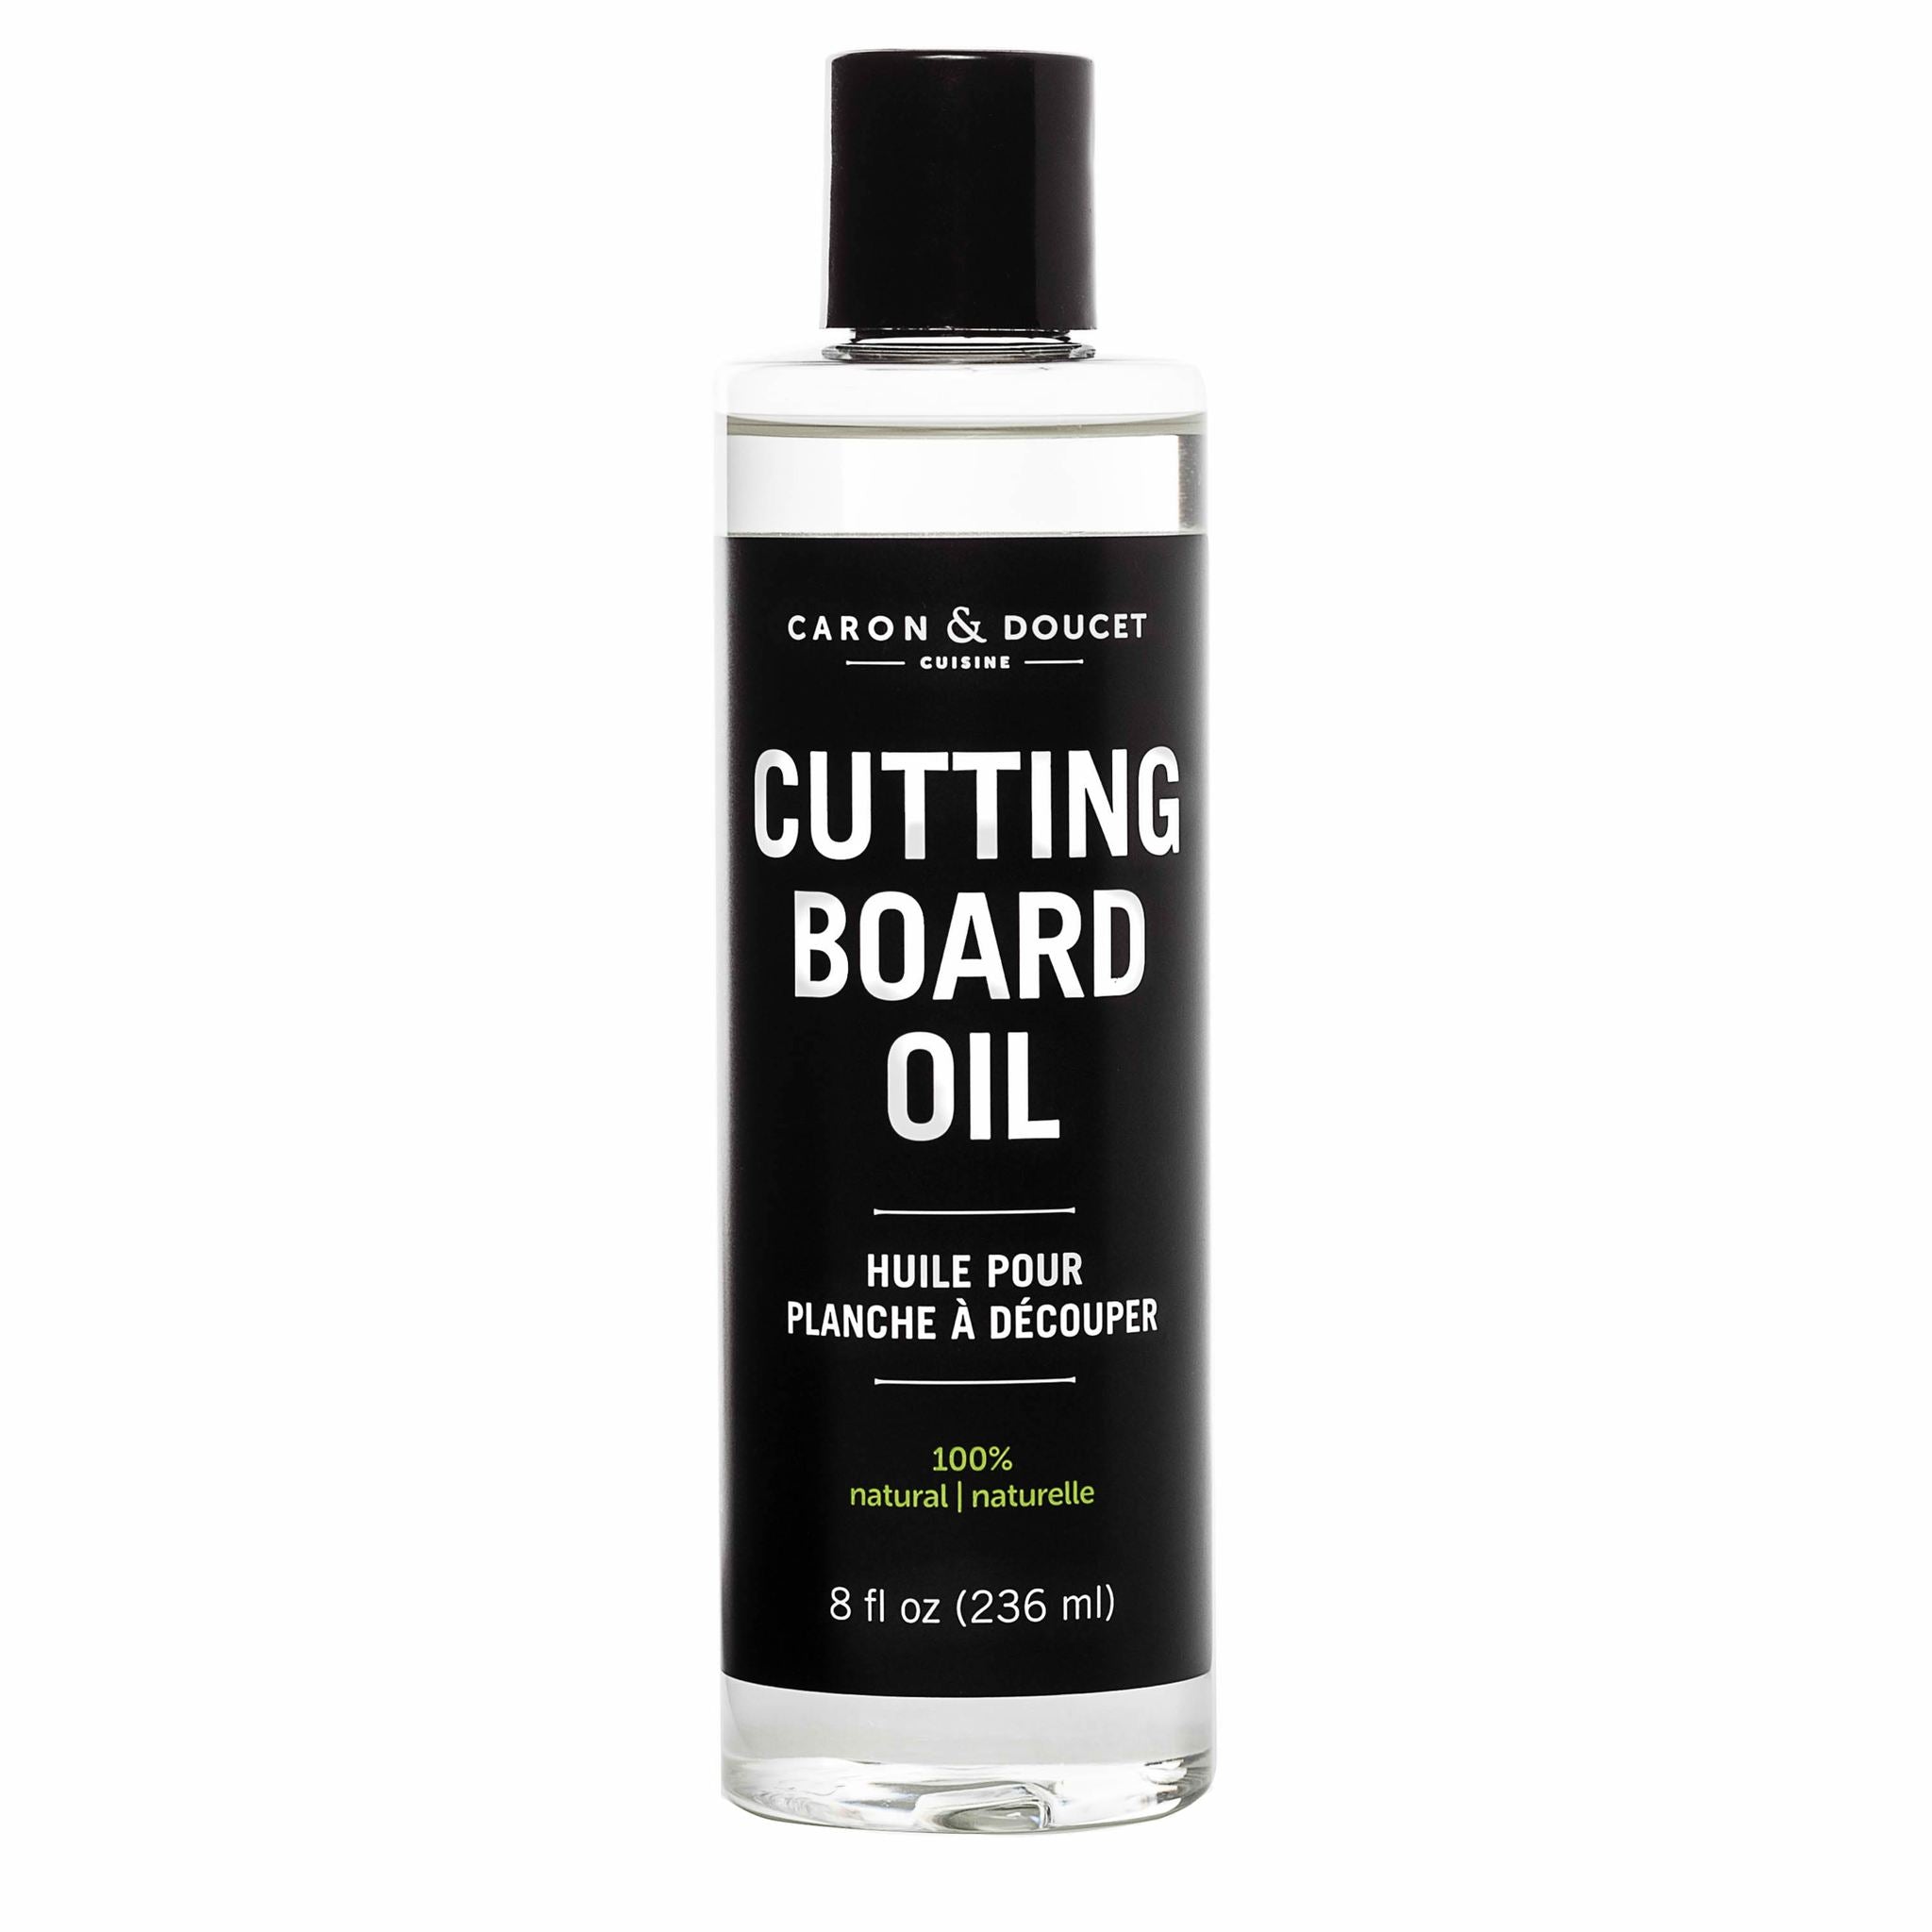 Caron & Doucet Cutting Board Oil